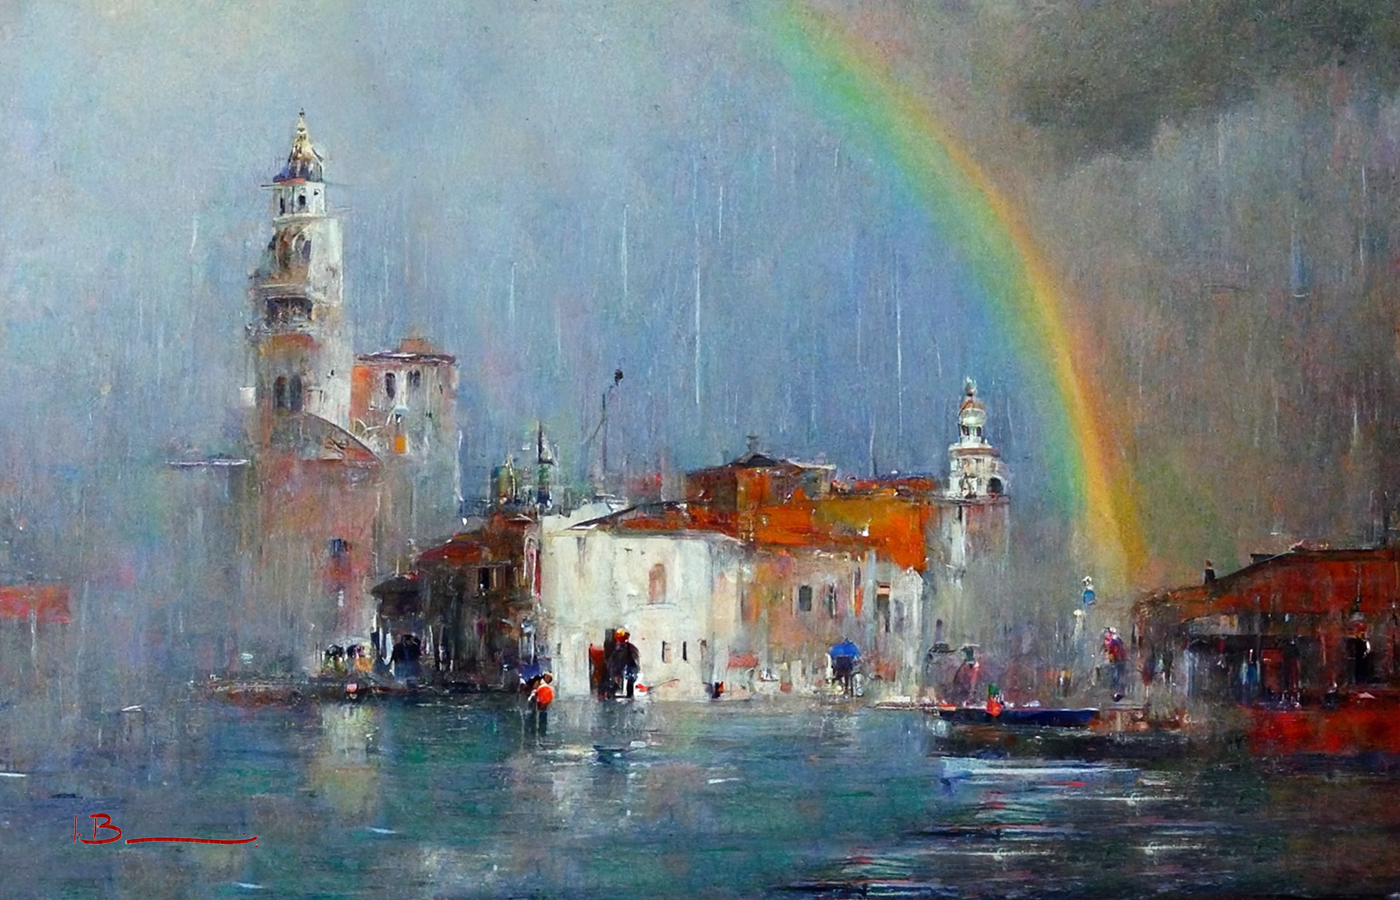 Raining in Venice